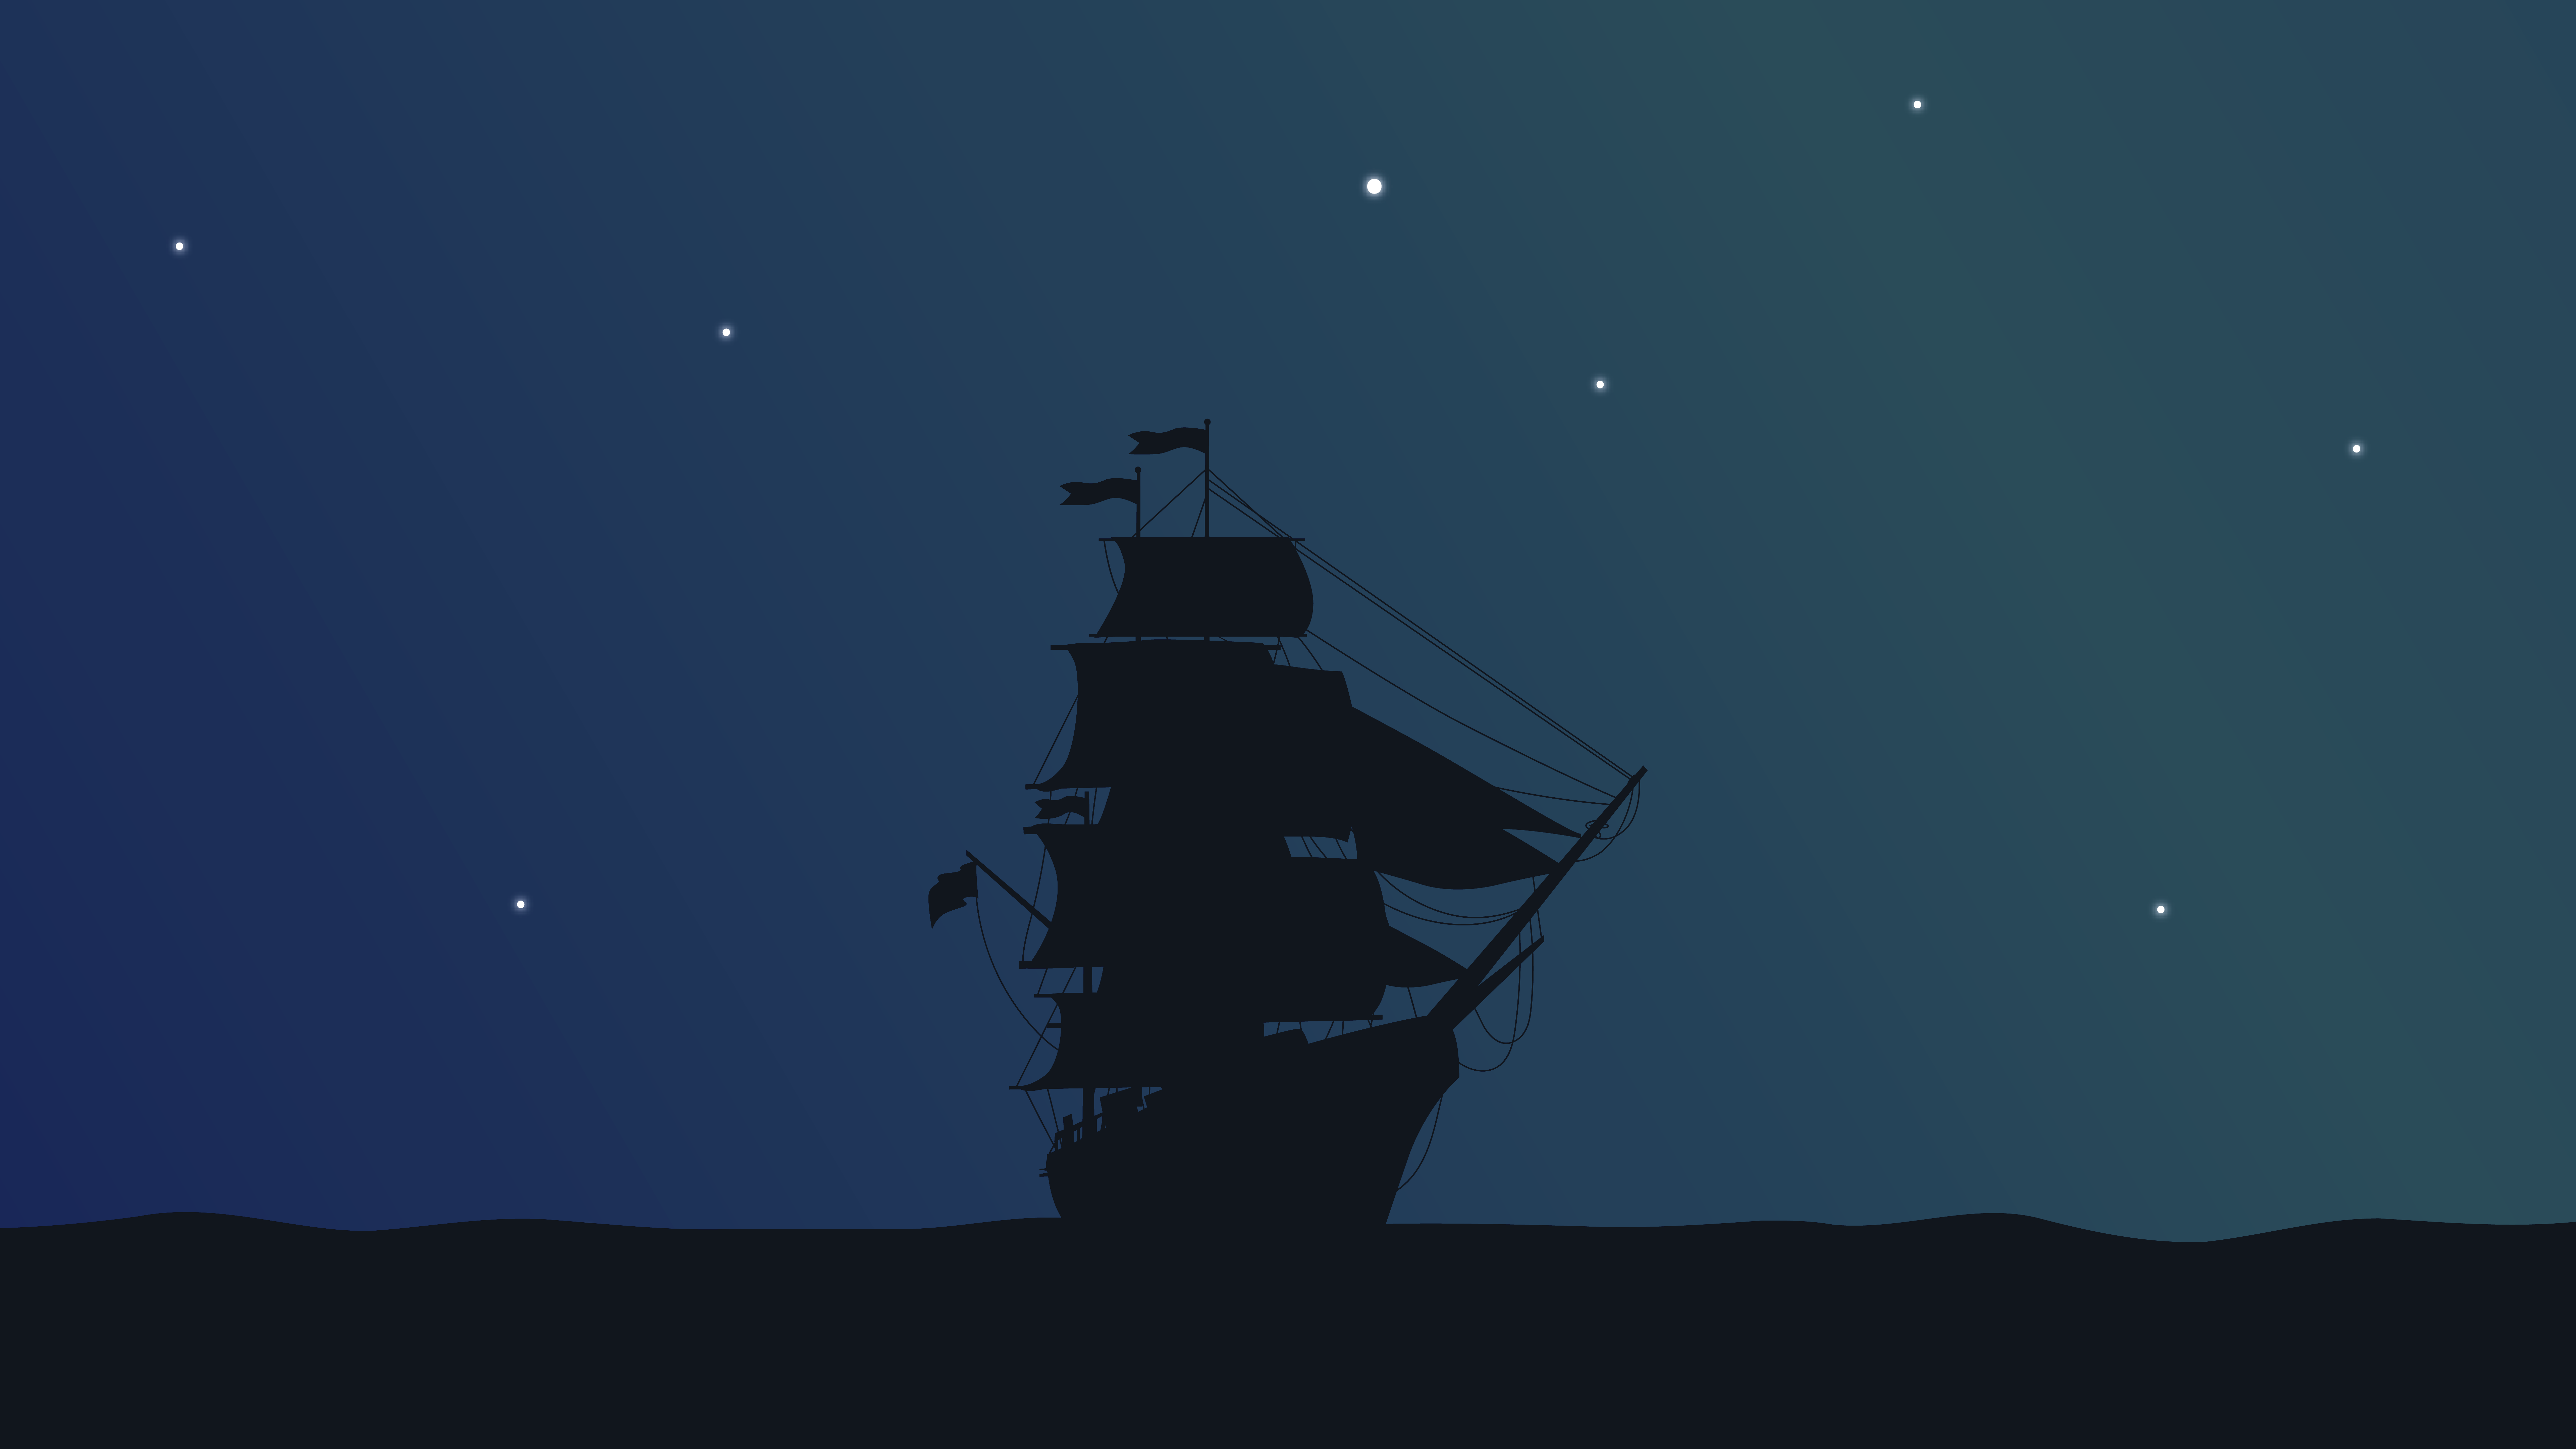 General 7680x4320 Pirate ship minimalism ship dark starred sky programming simple background silhouette sky